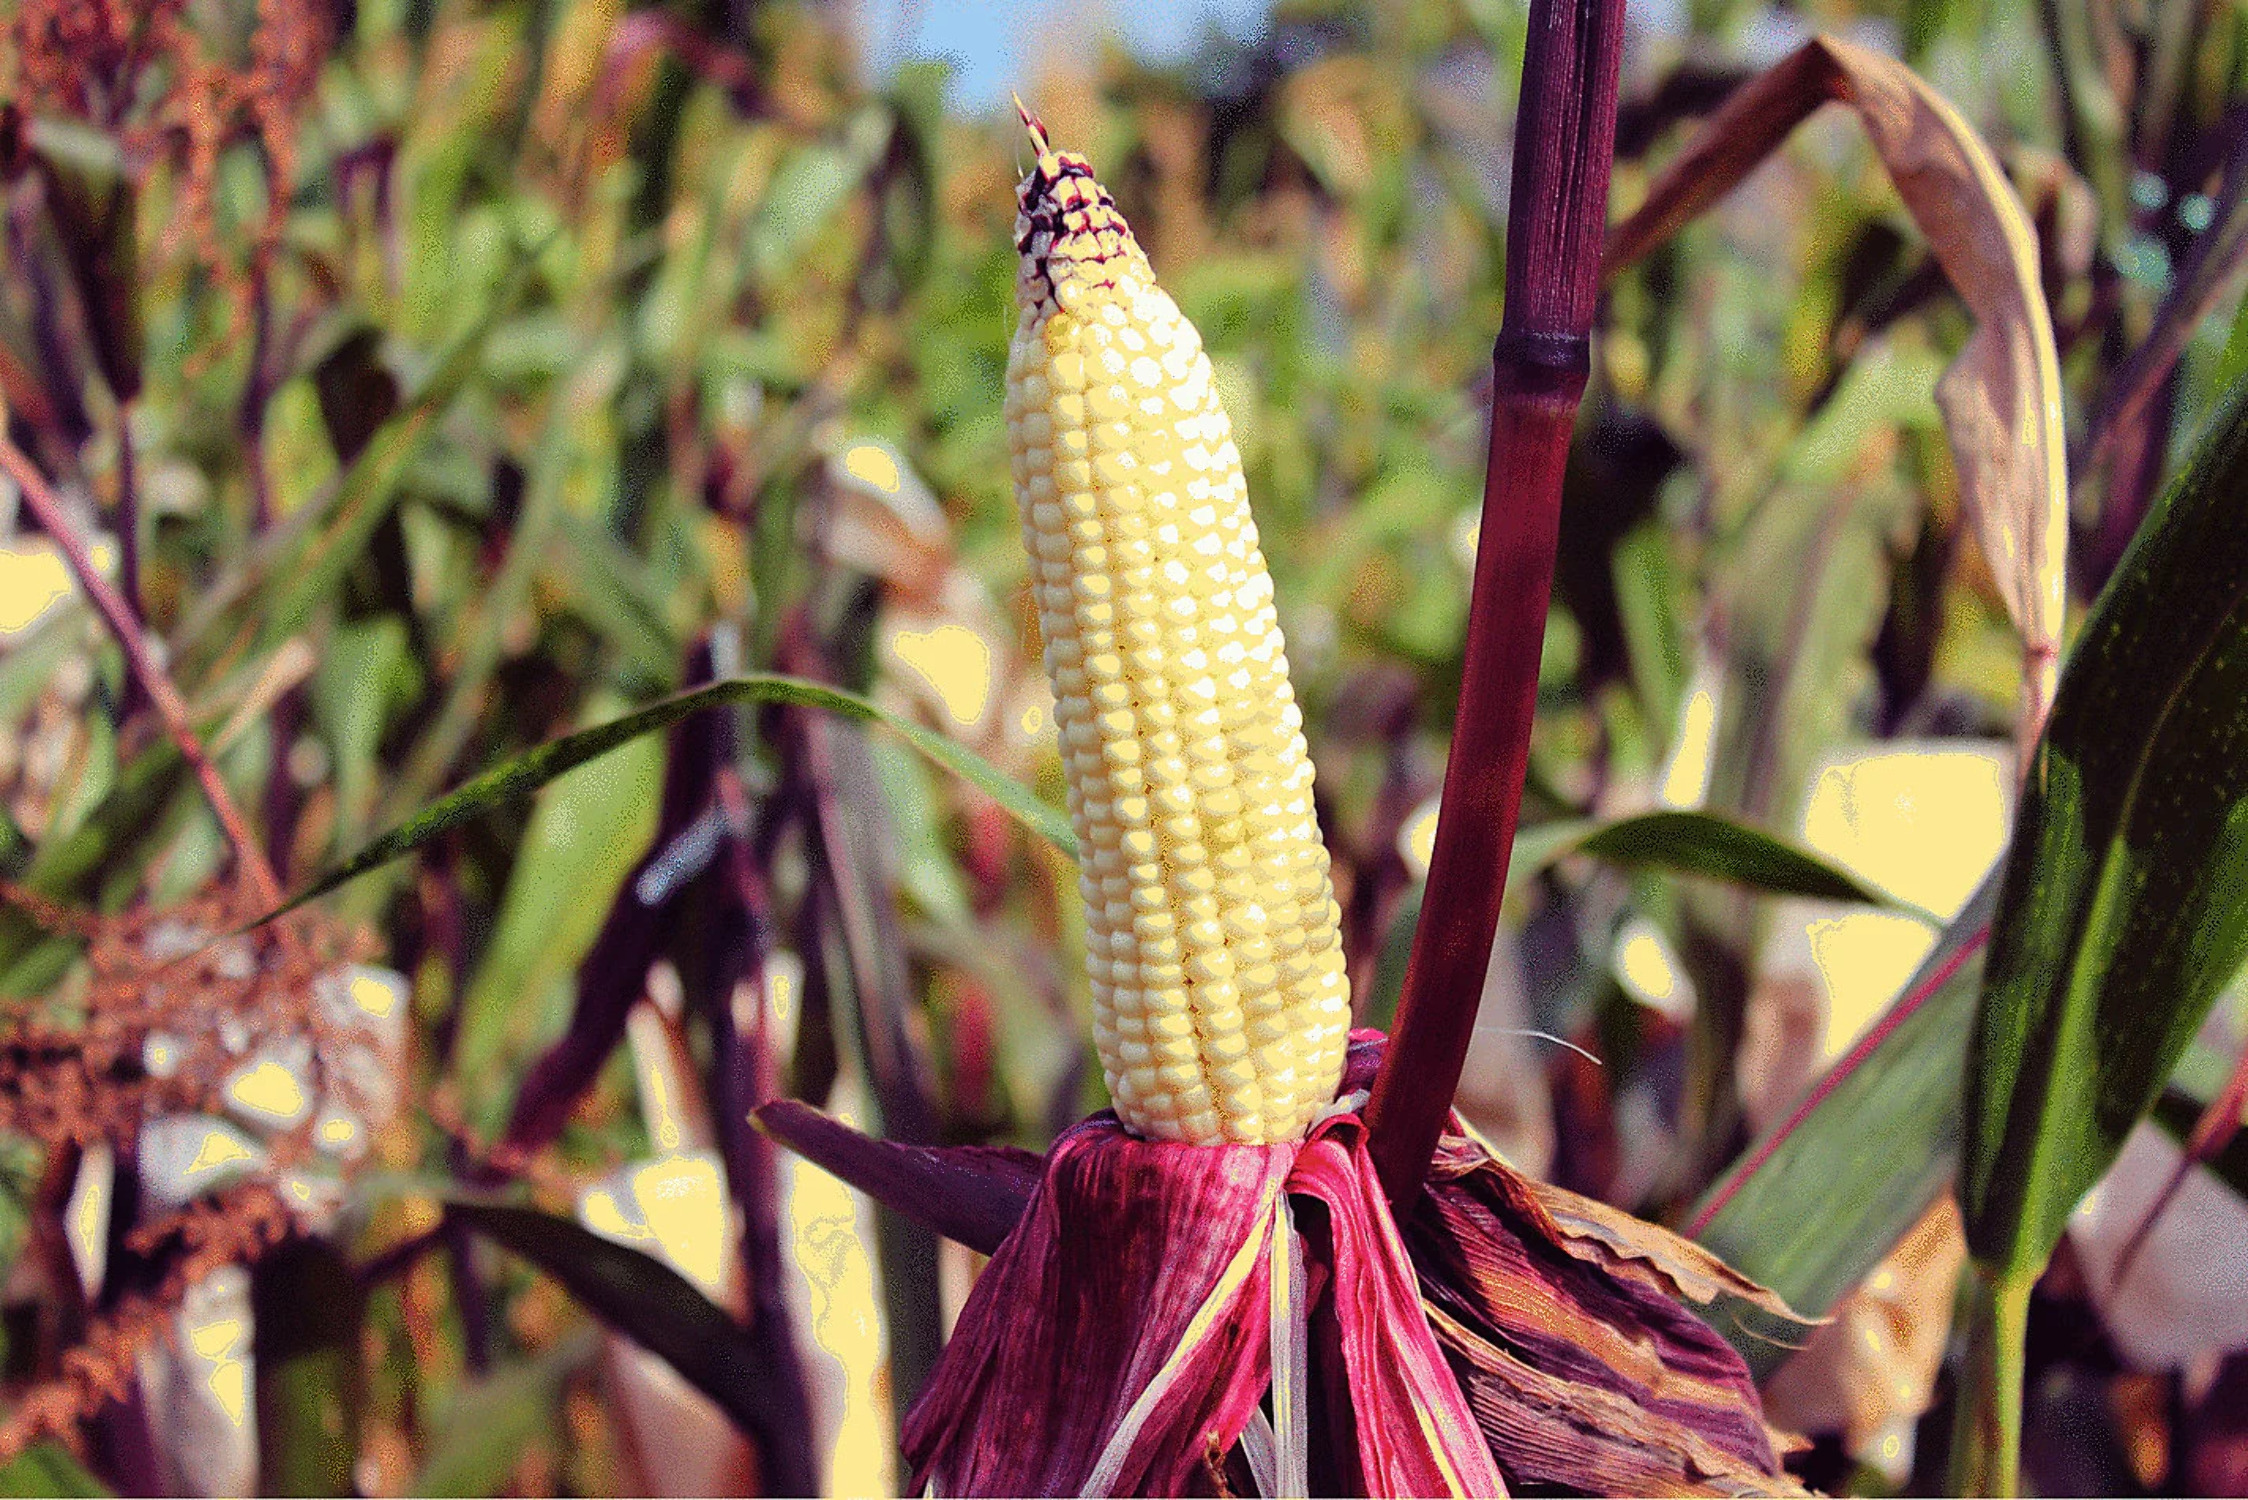 50 KANDY KORN CORN Sweet Yellow Corn Red Husk H.S.E. Zea Mays Vegetable Seeds - image 1 of 7